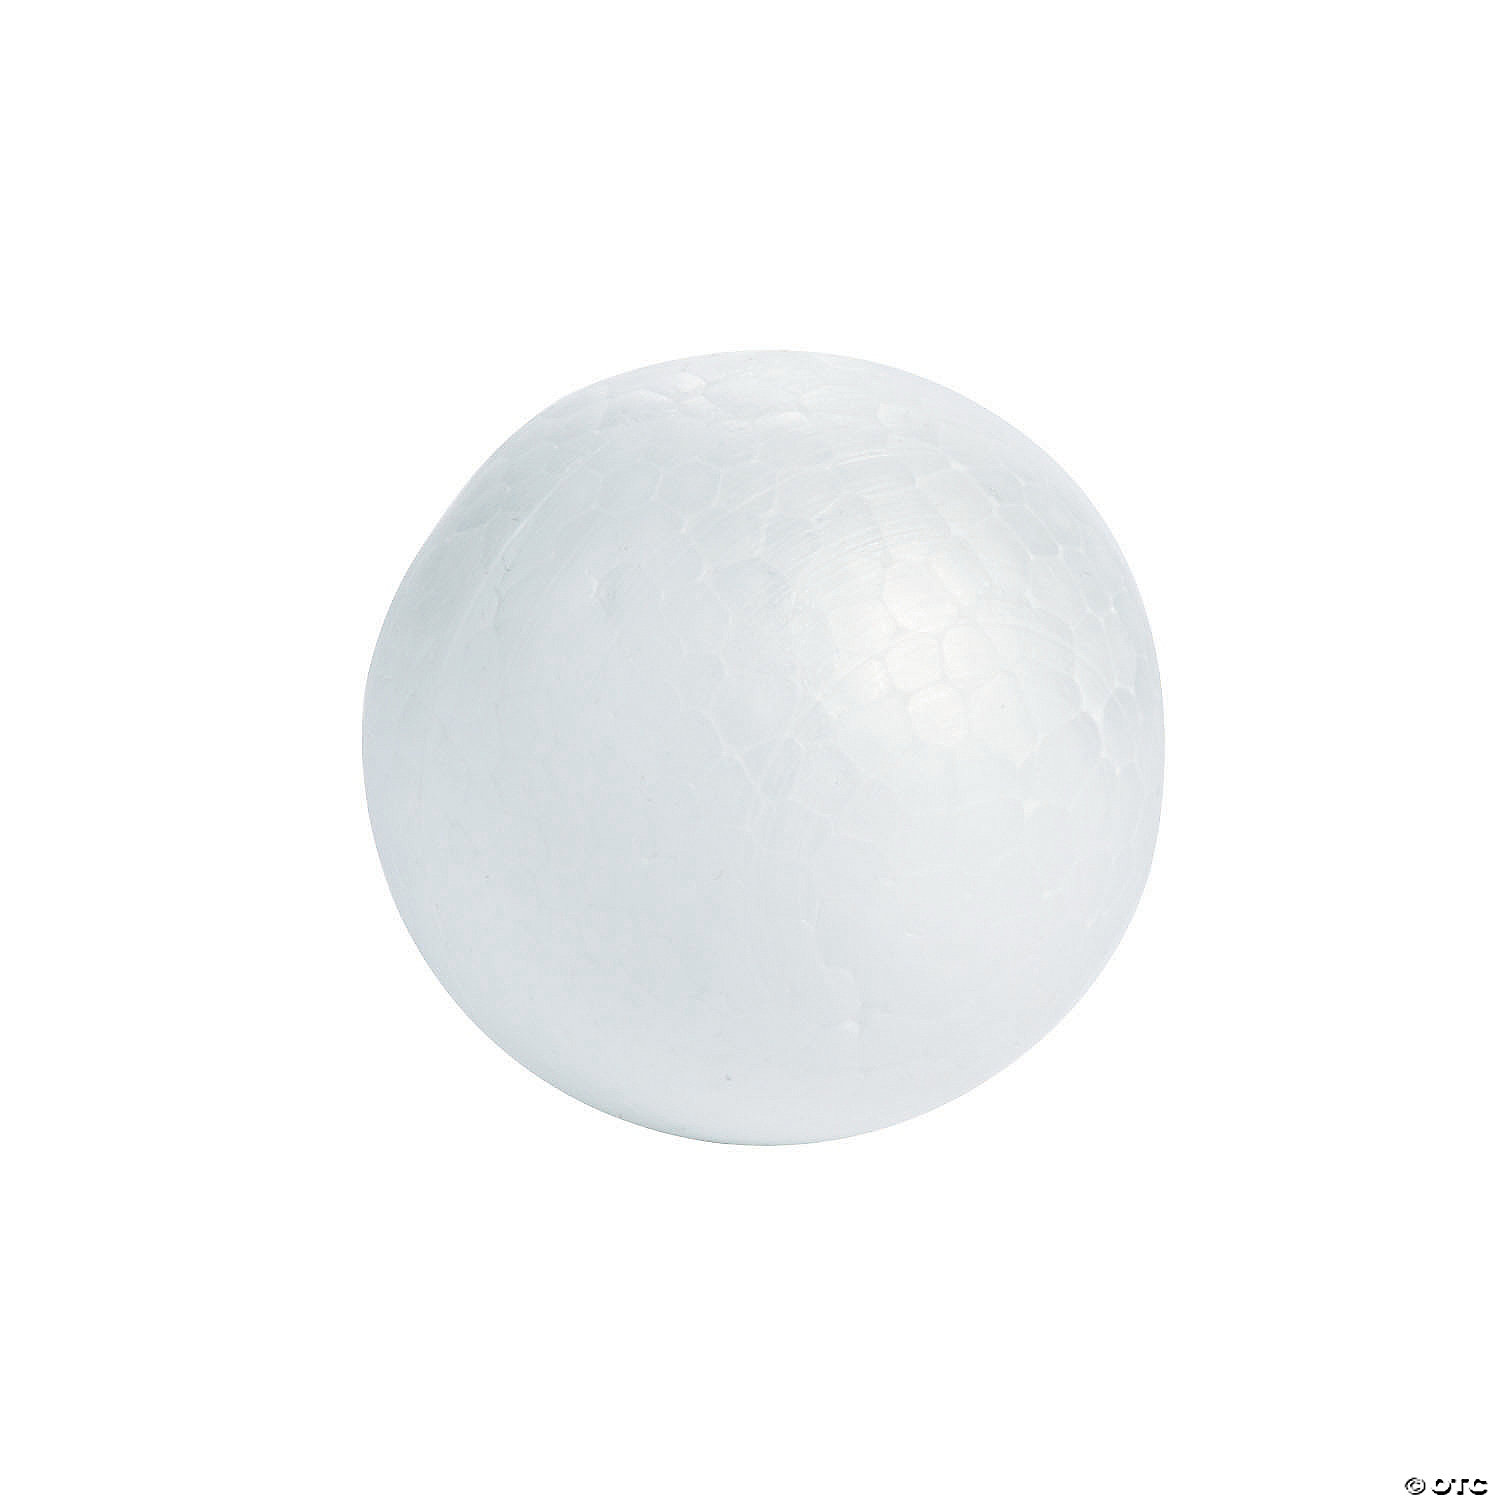 Blue Qingsun Styrofoam Balls 0.1-0.16 Inch Mini Foam Balls School Arts DIY Crafting Projects Supplies For Stick to Slime 13000 Pcs 